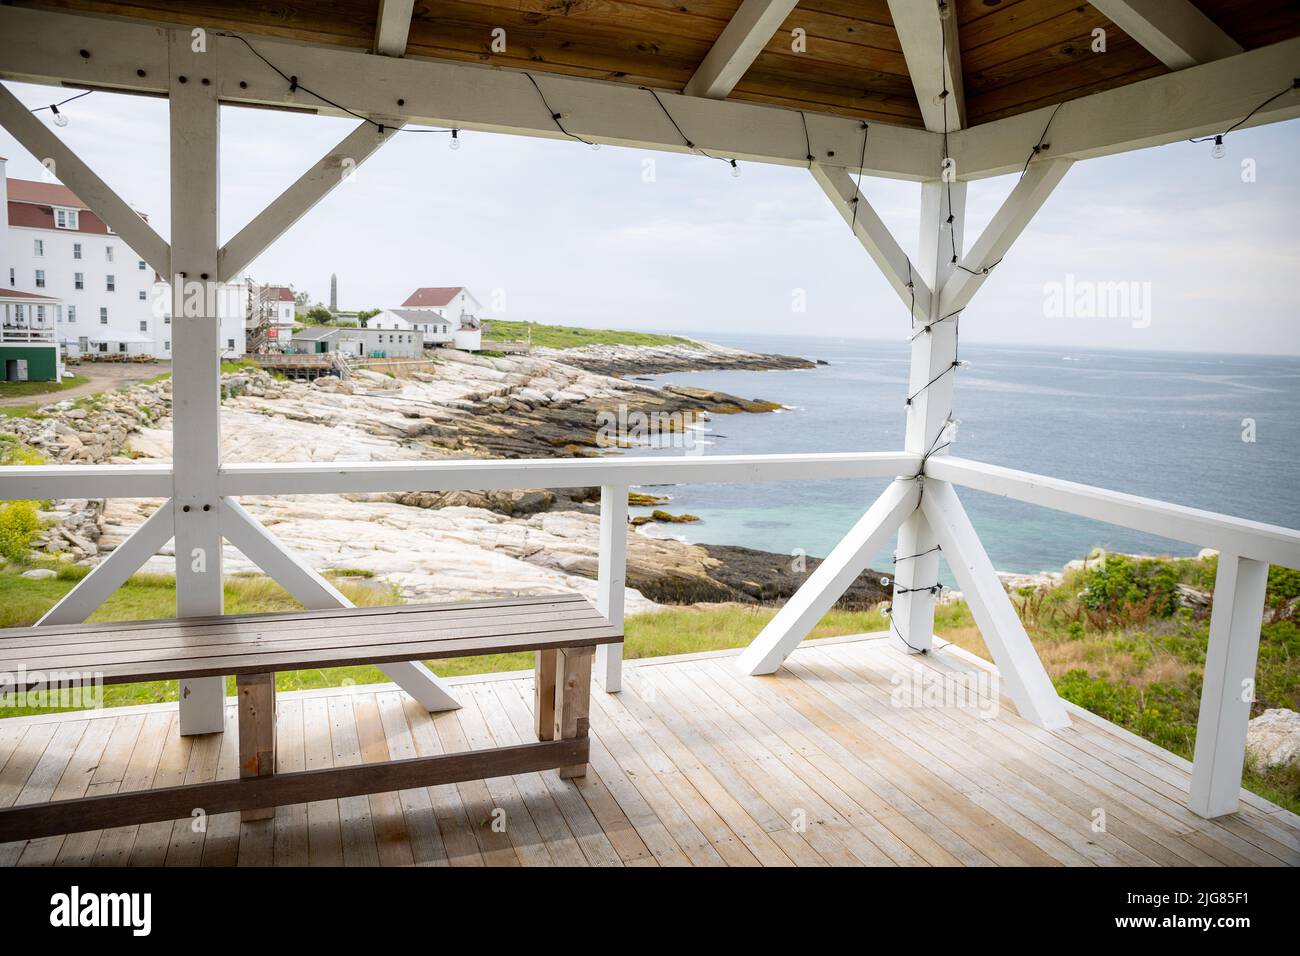 A wooden patio on a rocky seashore on Star Island Stock Photo